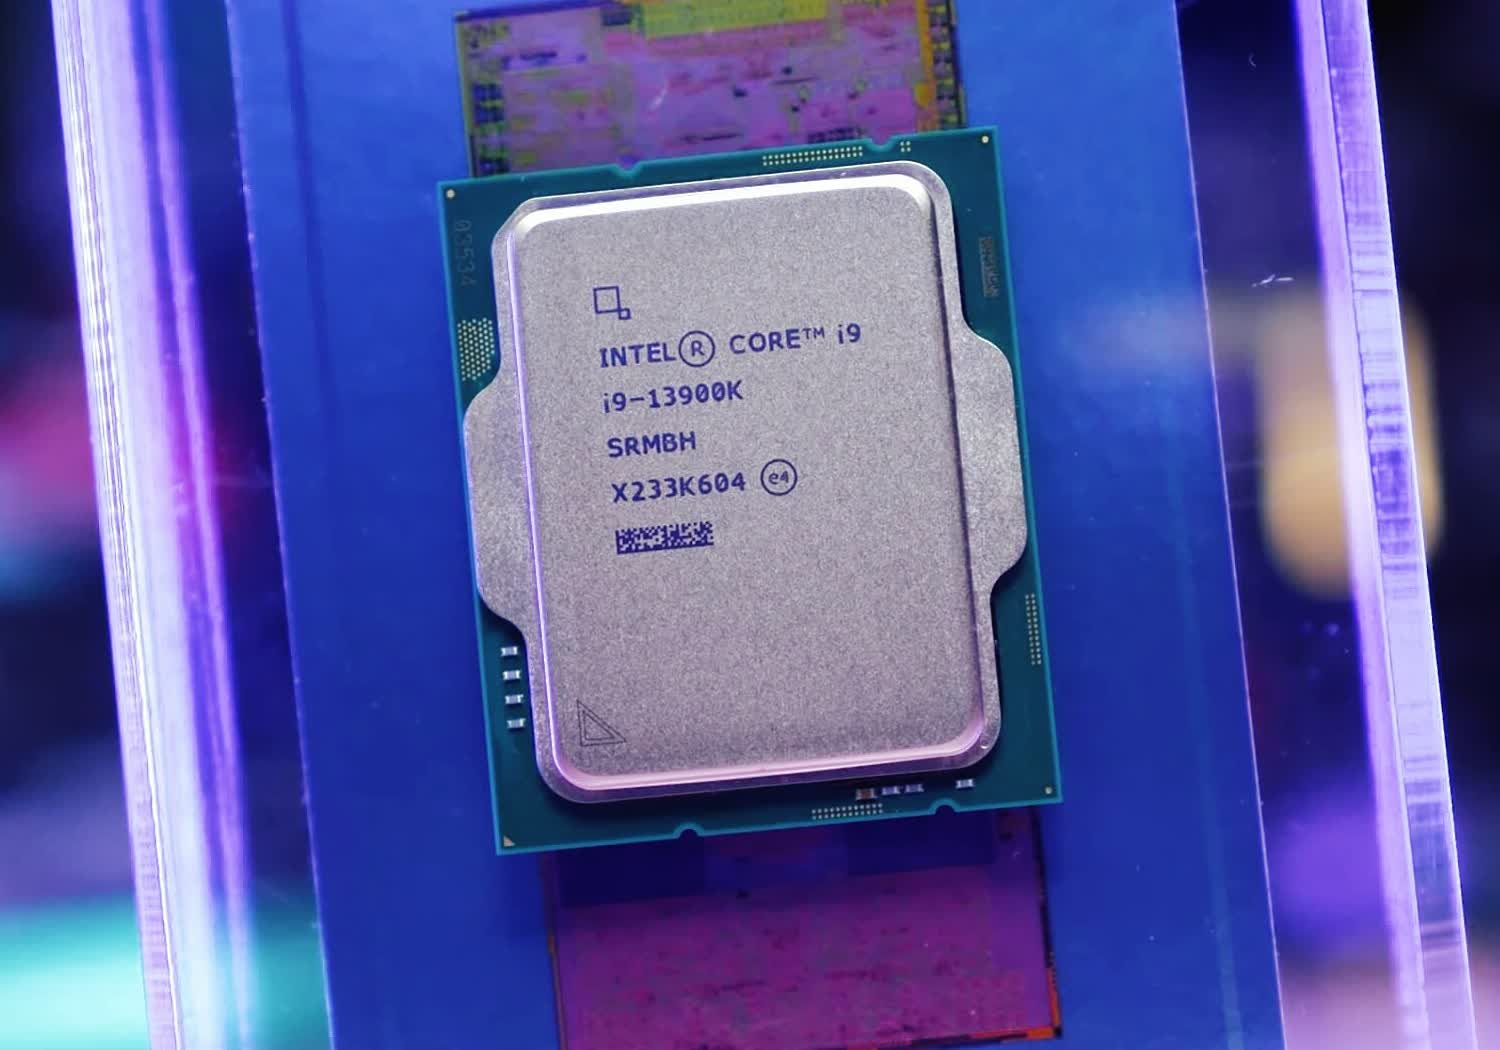 8.8 GHz: Intel 13900K on liquid nitrogen achieves highest overclock on record